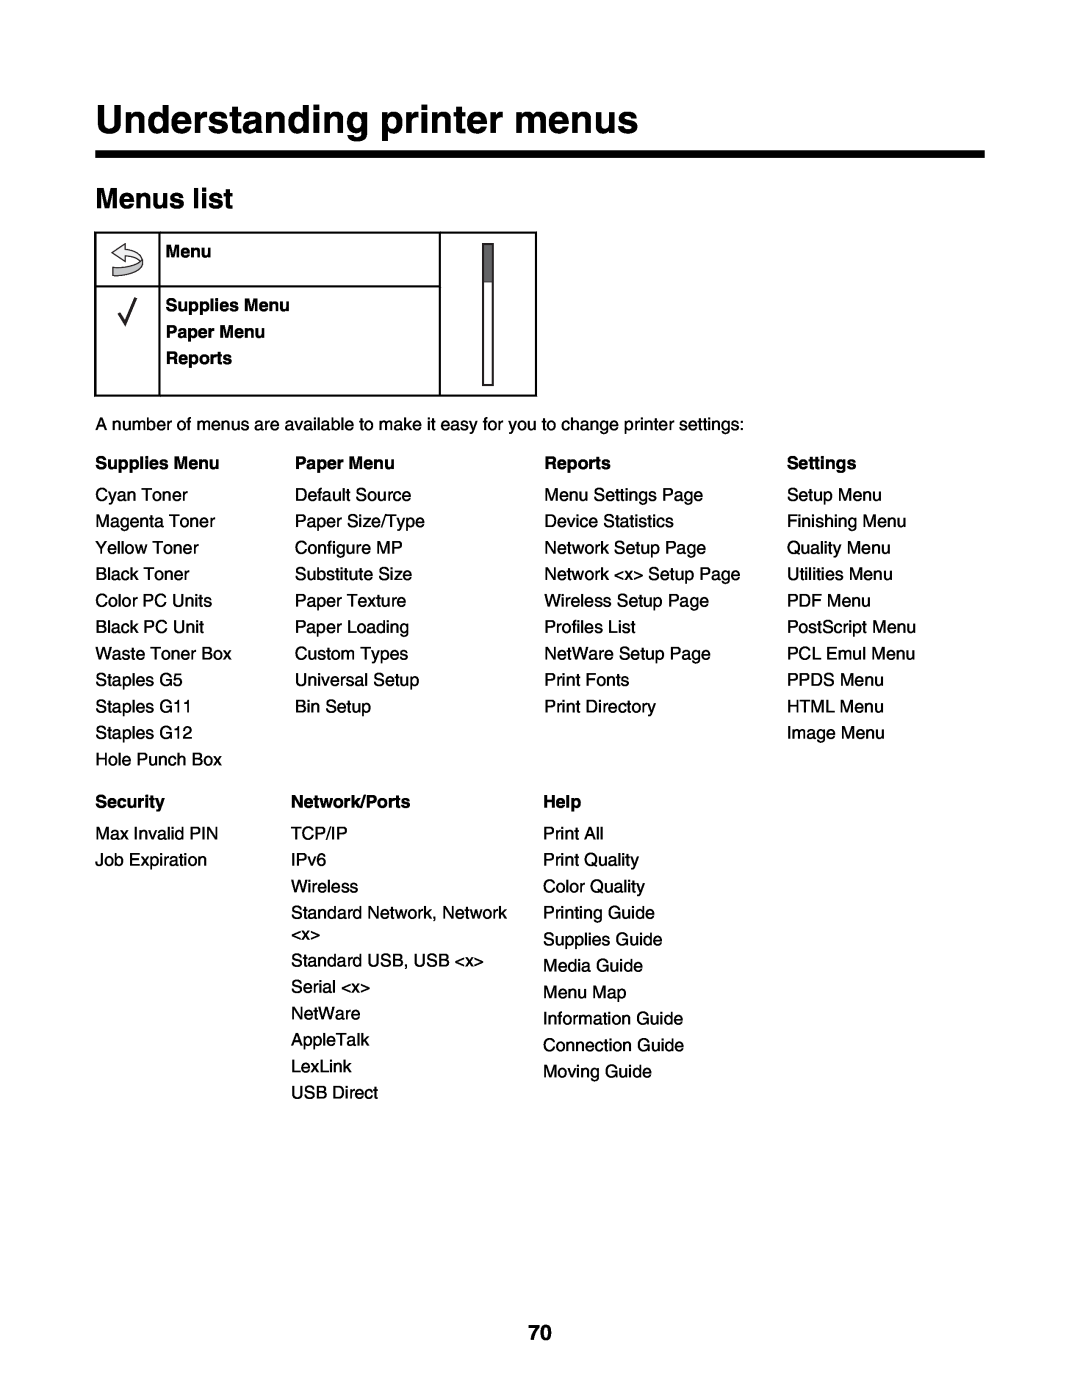 Lexmark C935 manual Understanding printer menus, Menus list, Supplies Menu, Paper Menu, Reports, Settings, Security, Help 